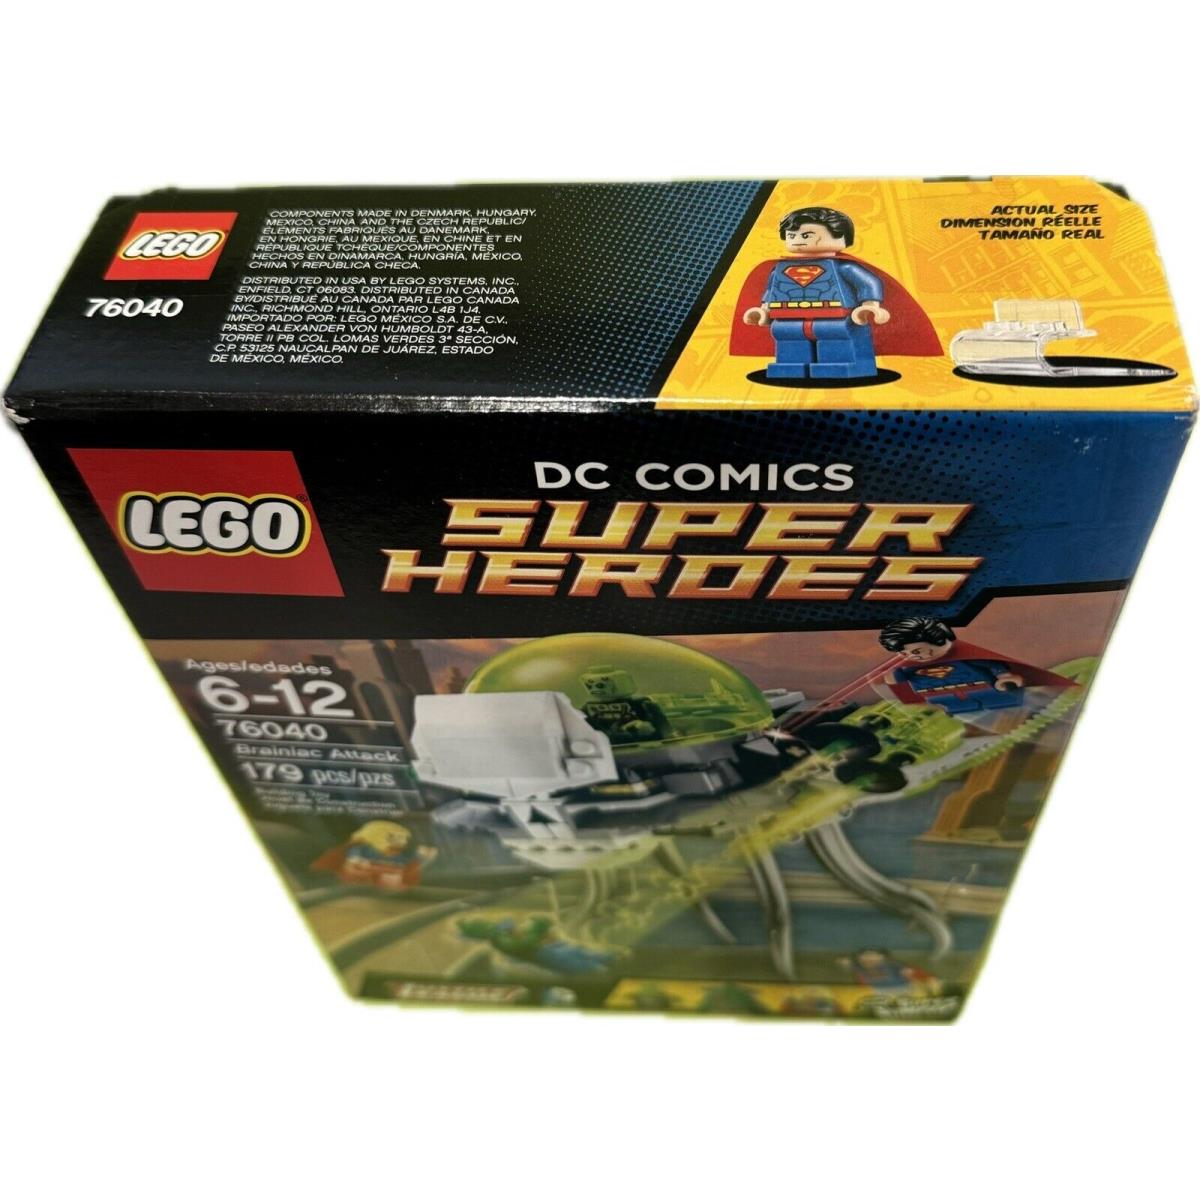 Lego 76040 DC Super Heroes Justice League Brainiac Attack